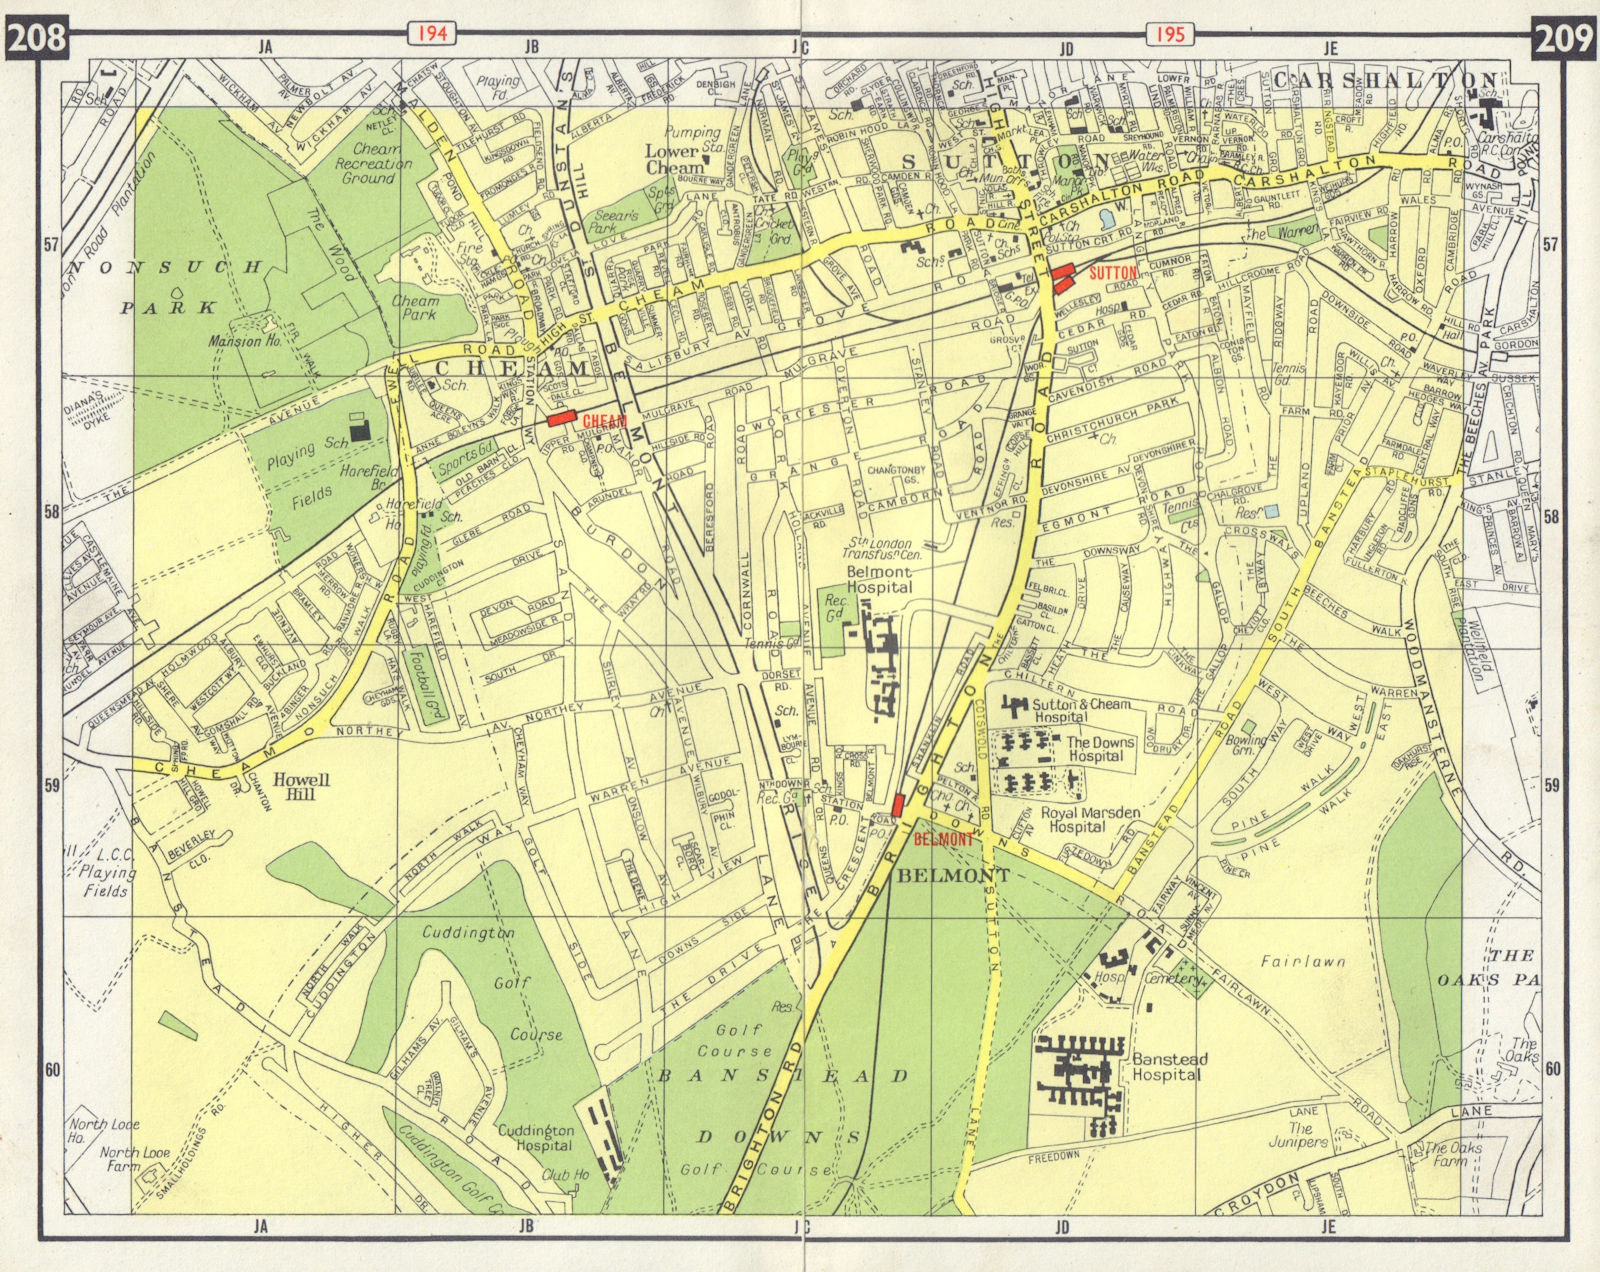 SW LONDON Cheam Sutton Belmont Carshalton Banstead Howell East Ewell 1965 map